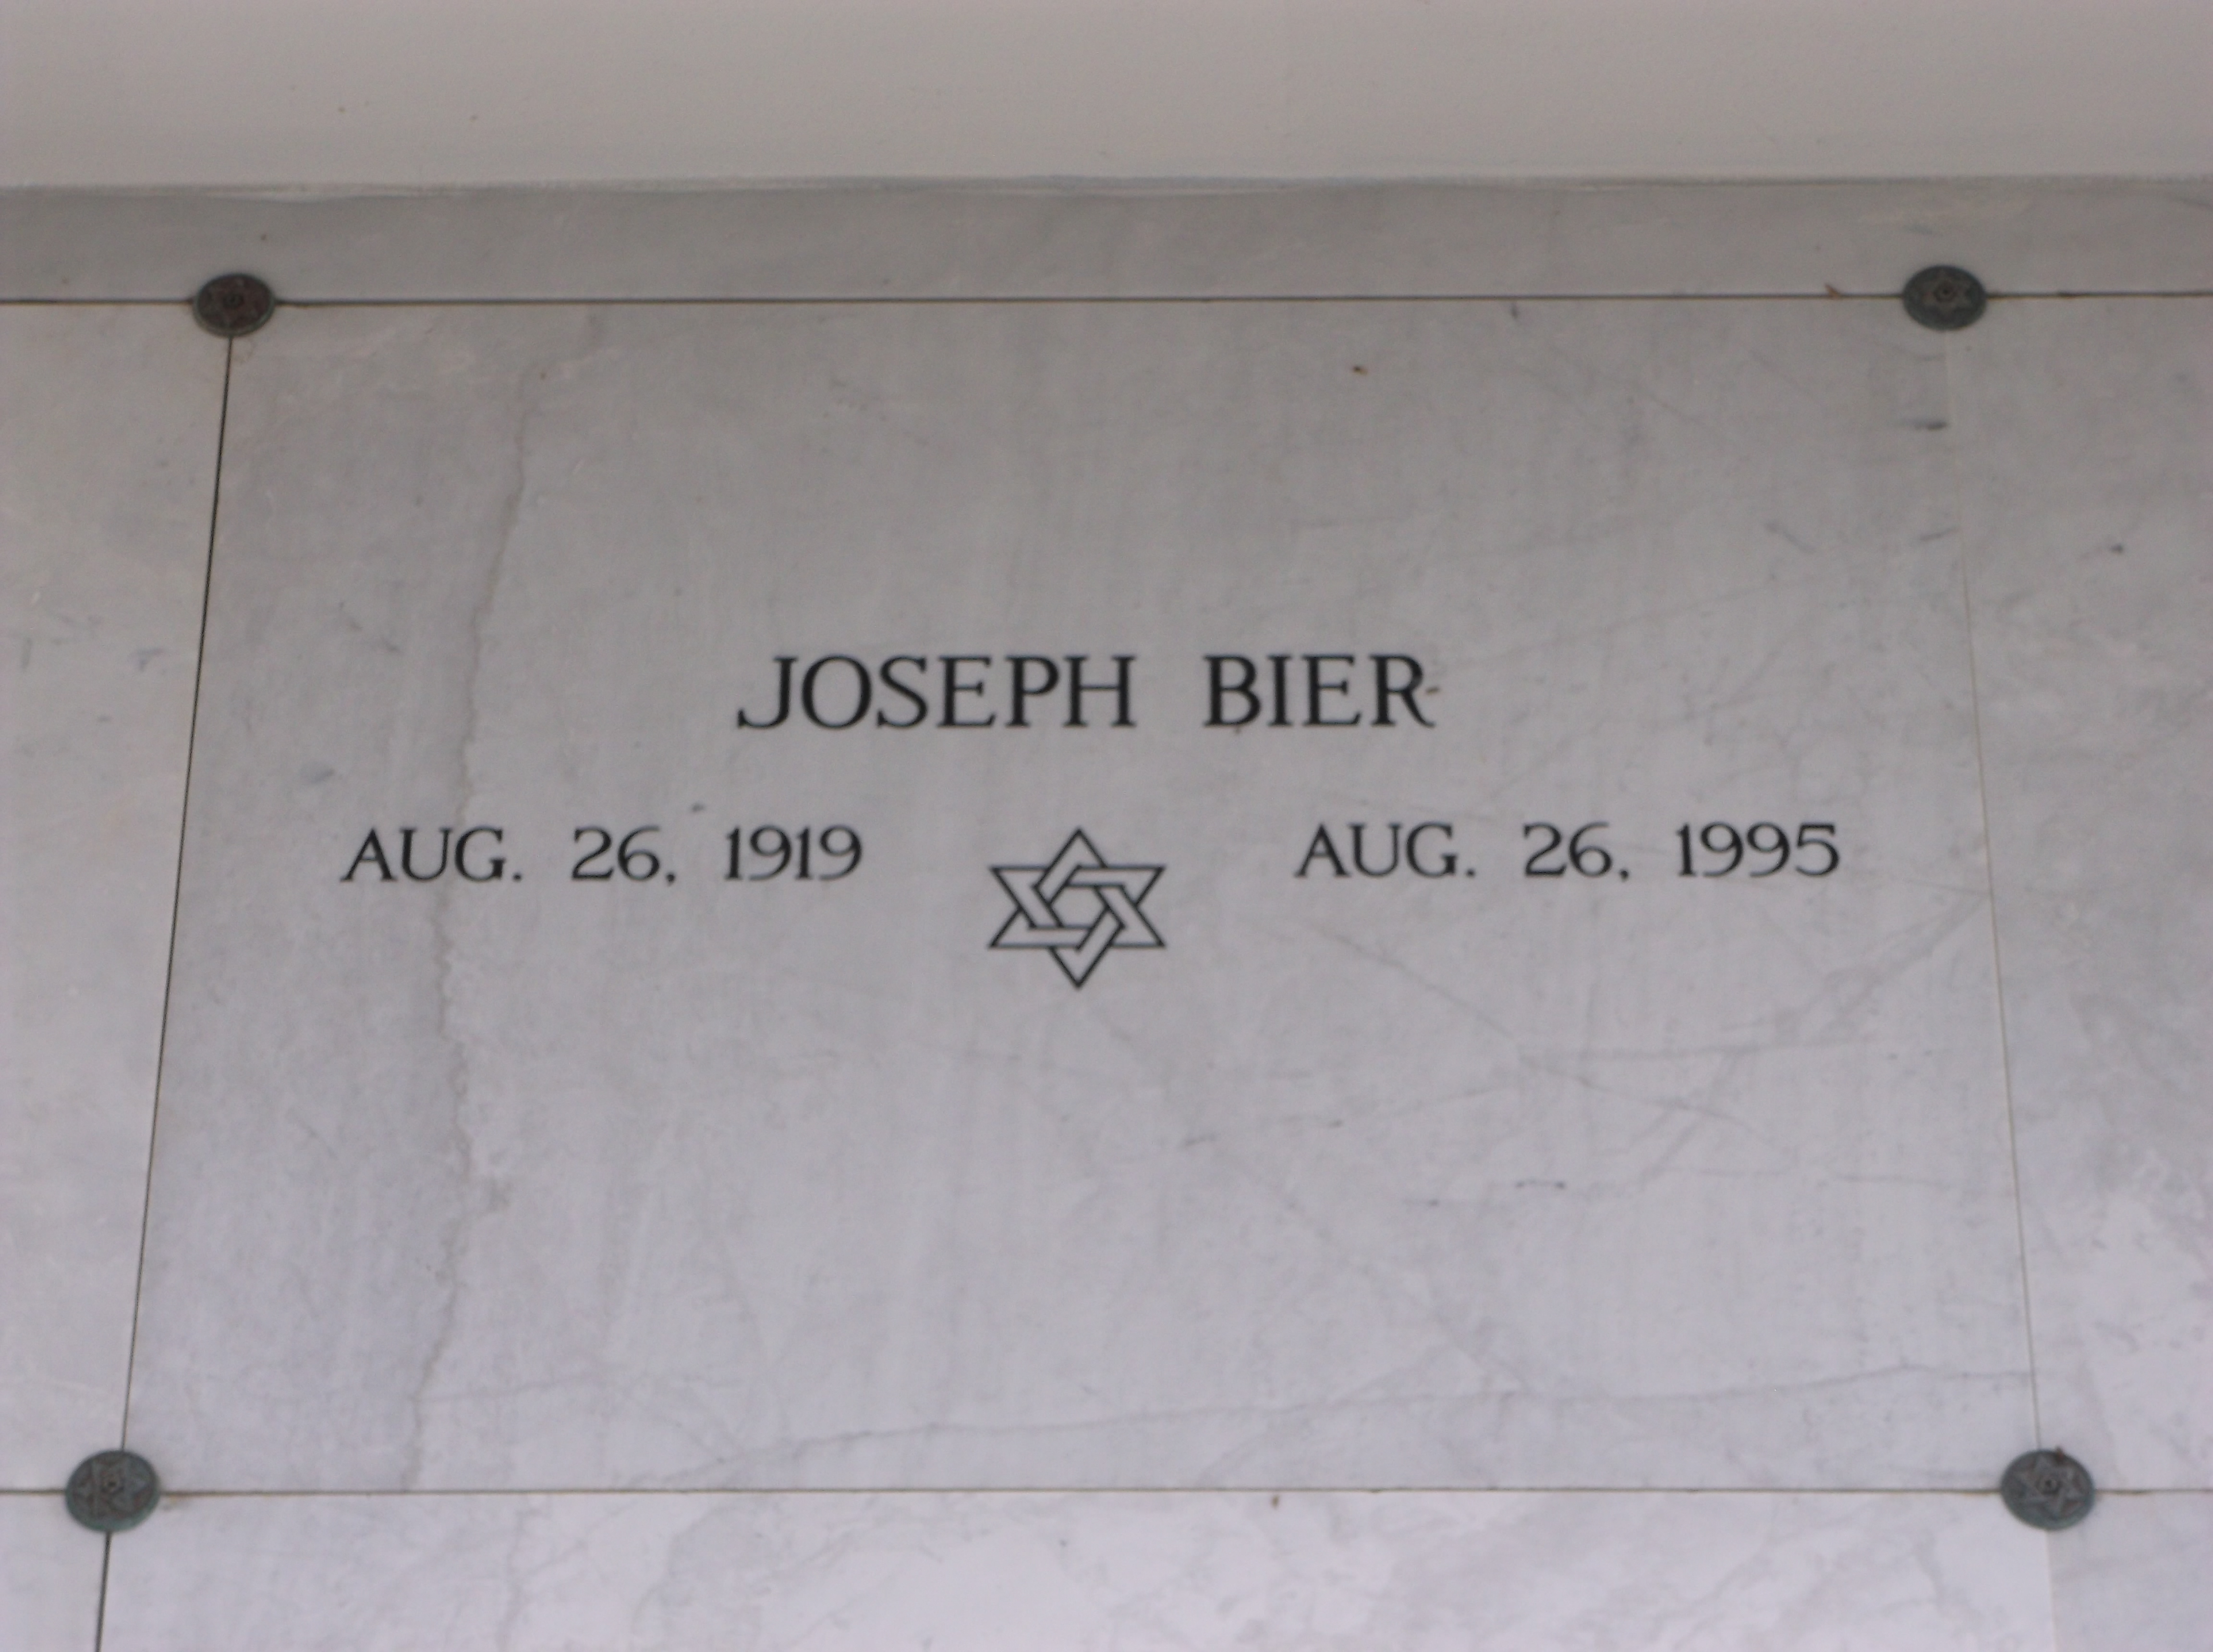 Joseph Bier